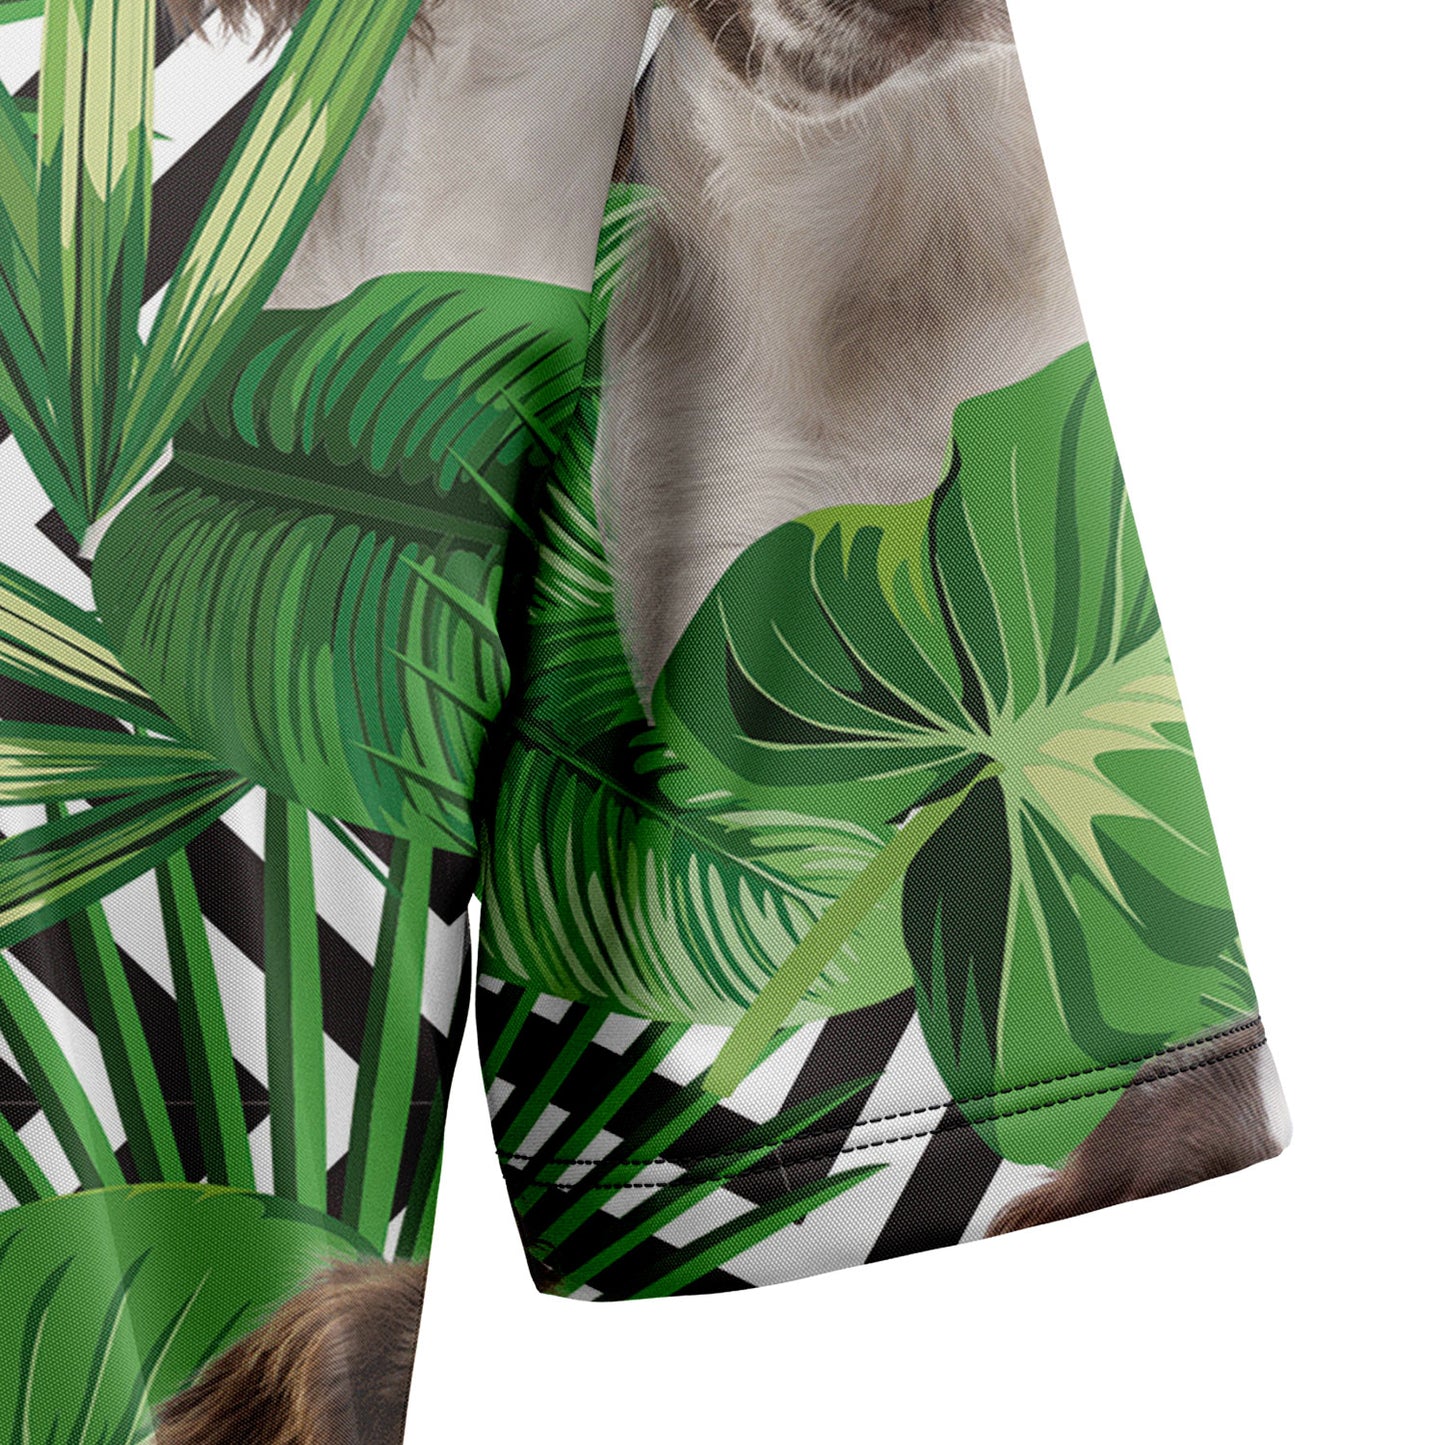 Summer Exotic Jungle Tropical English Springer Spaniel H97101 Hawaiian Shirt